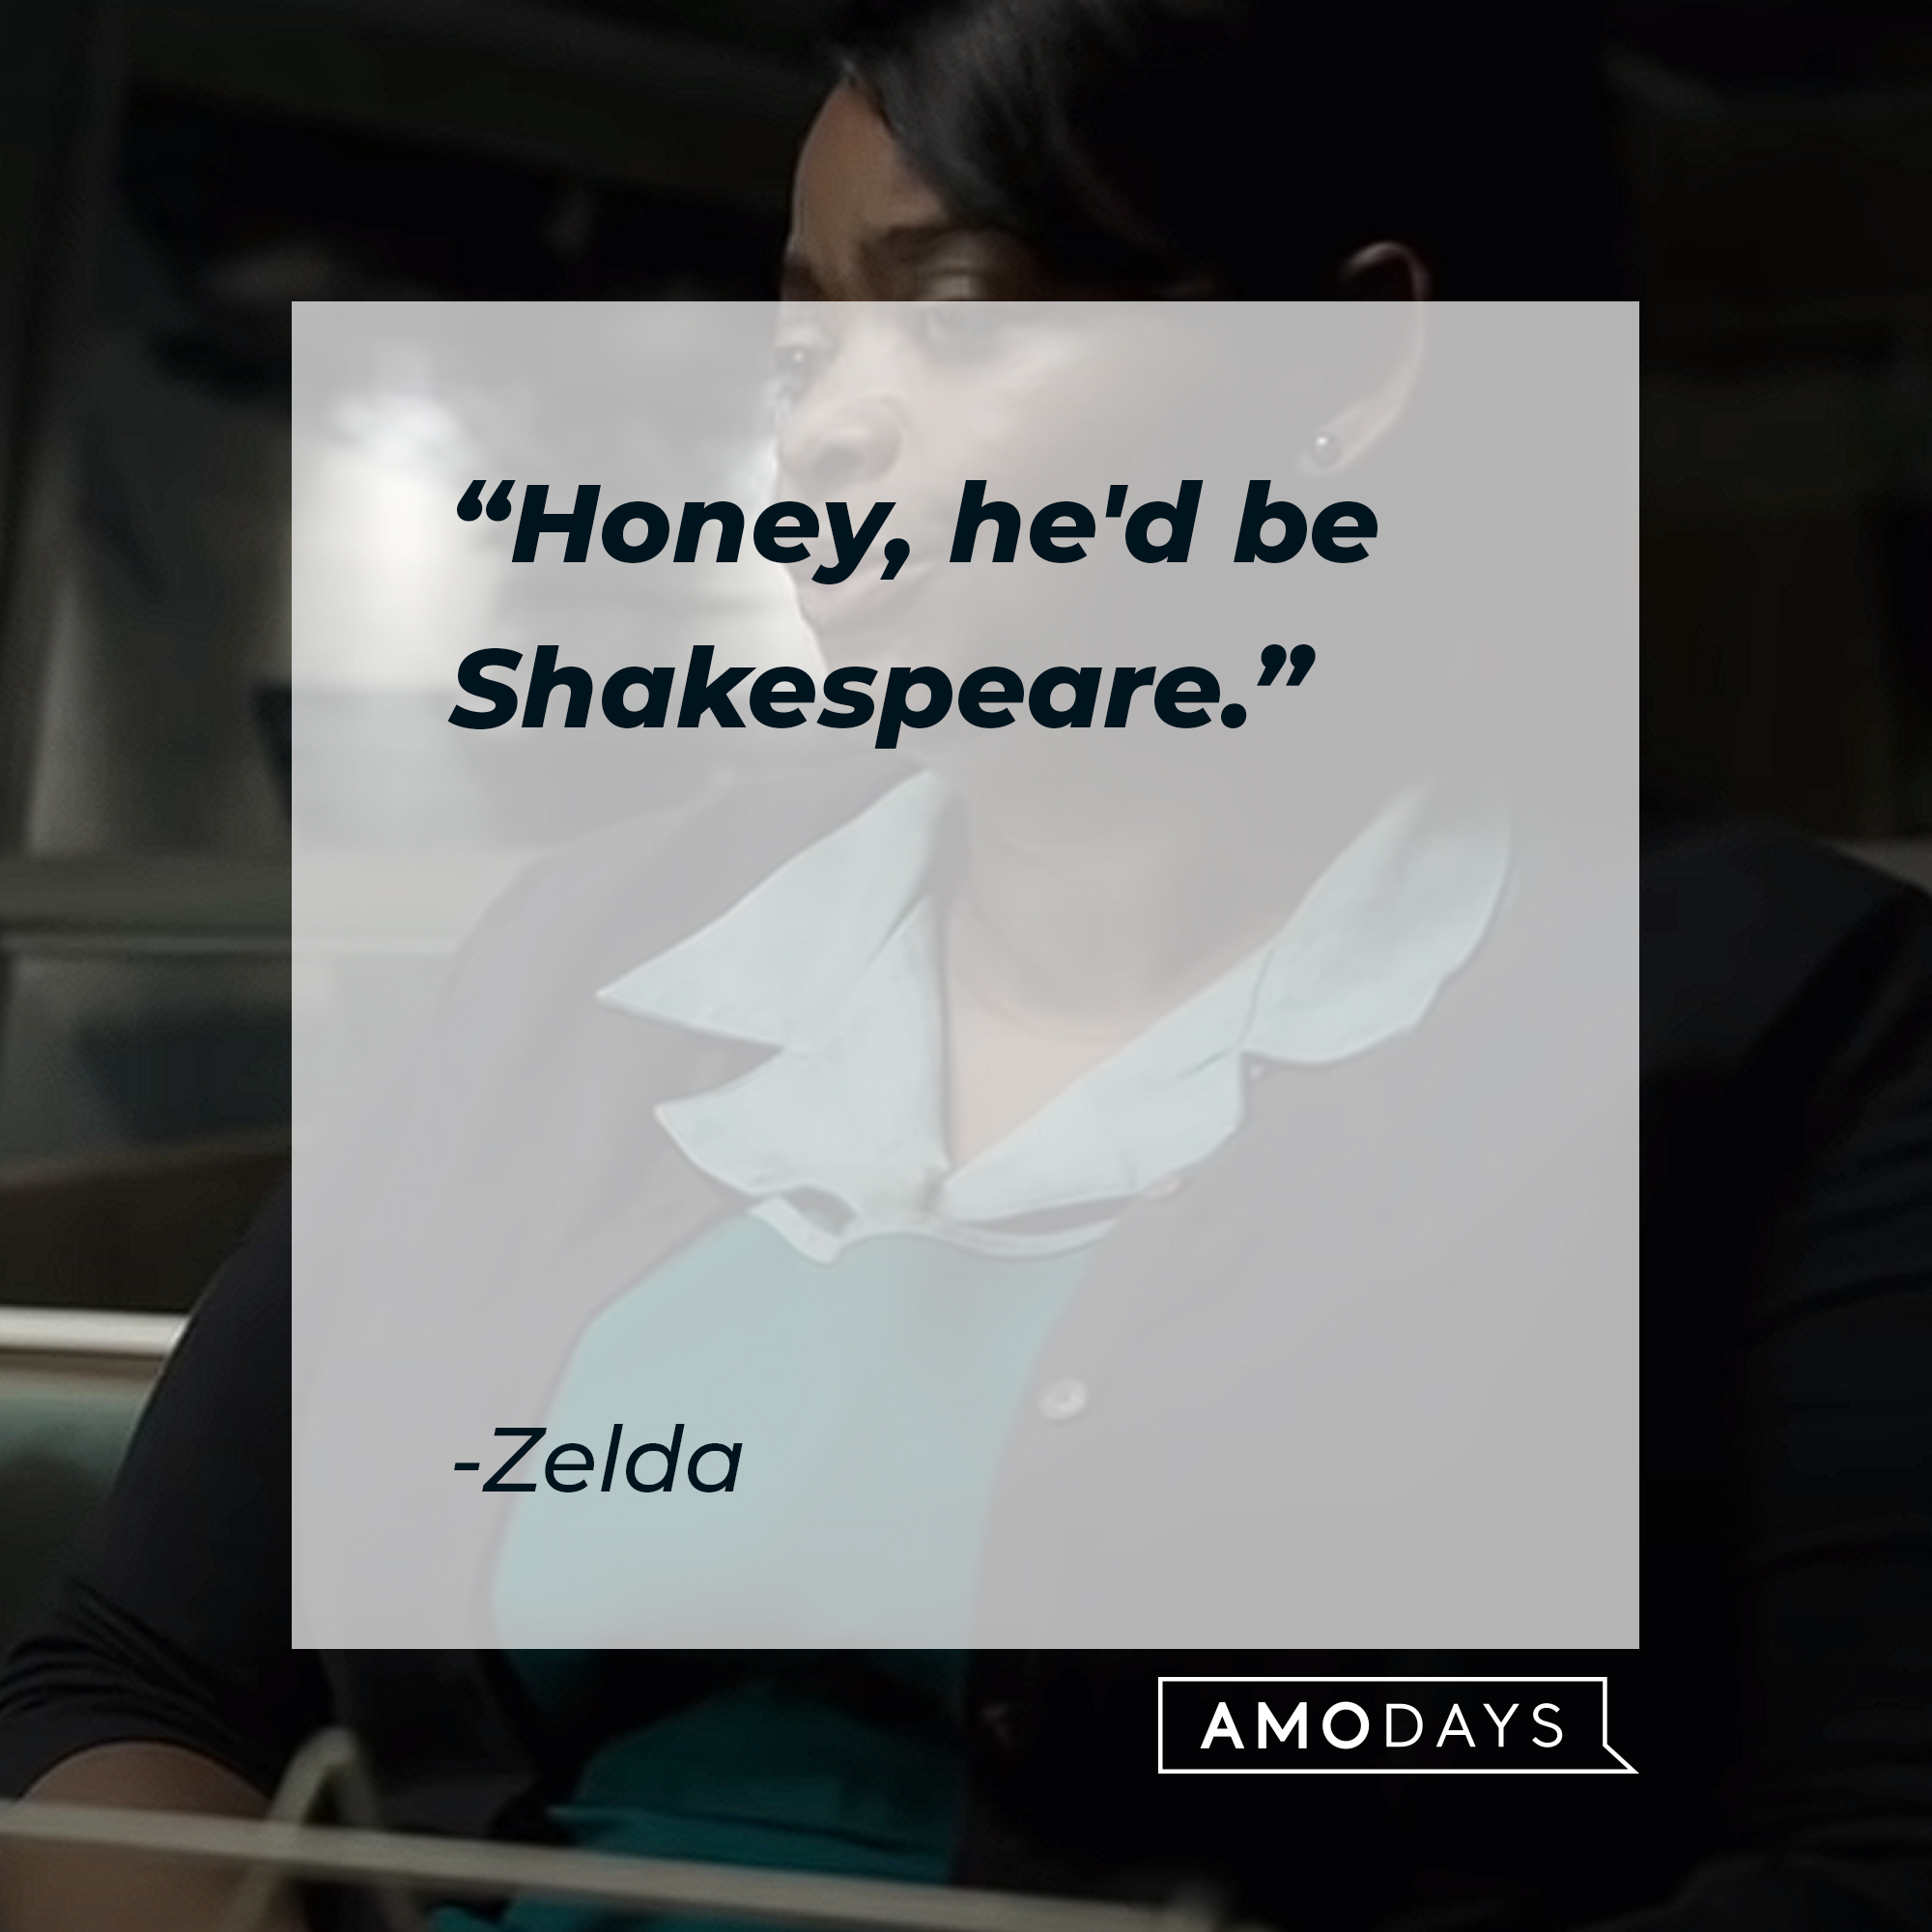 Zelda's quote : “Honey, he'd be Shakespeare.” | Source:youtube.com/searchlightpictures